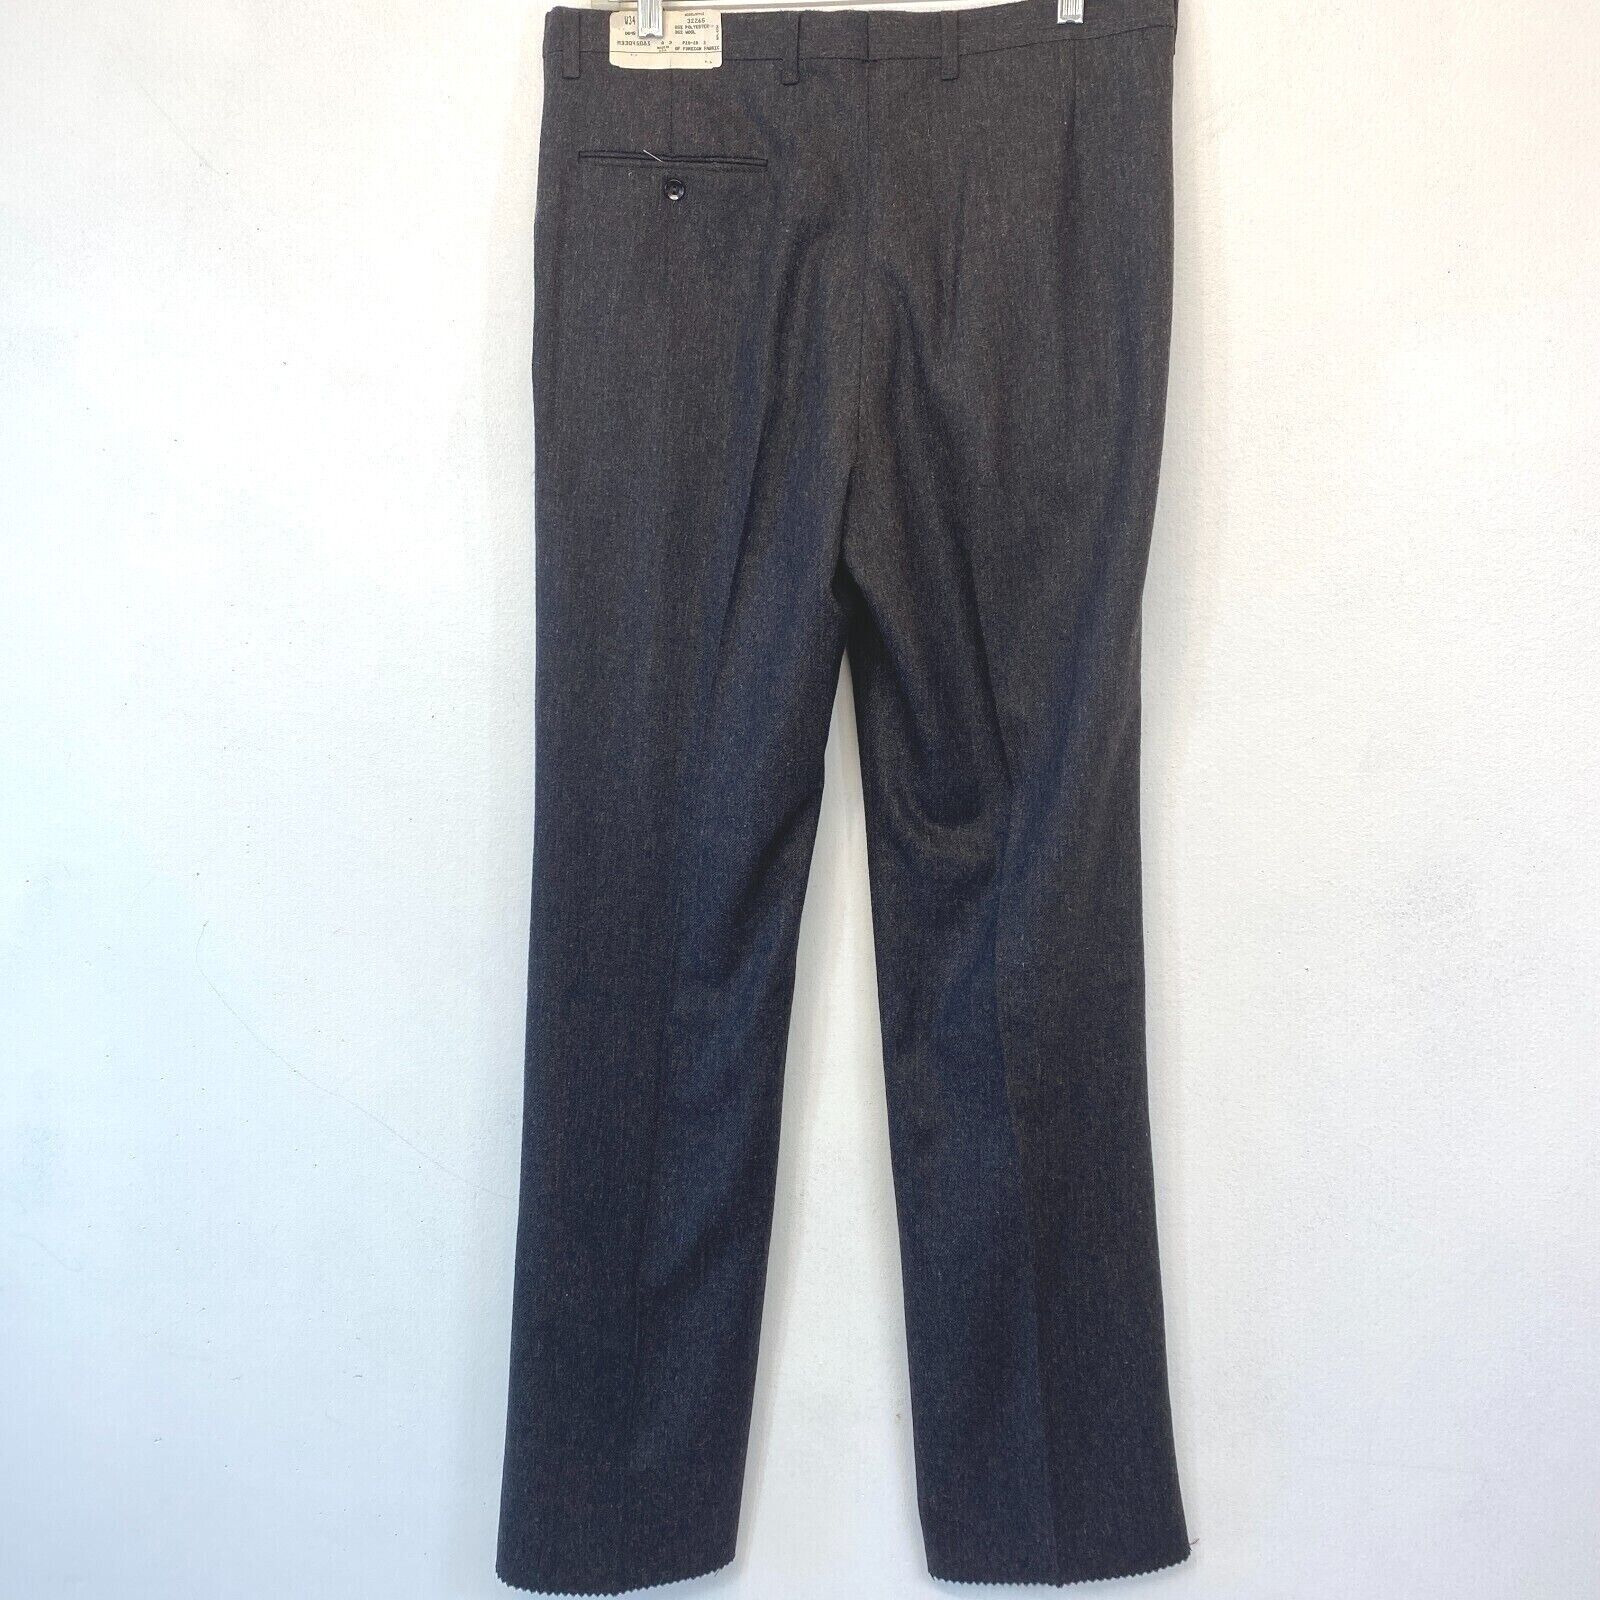 Dress Pants size 33 34 Charcoal Gray Wool Blend Vintage Pleate...